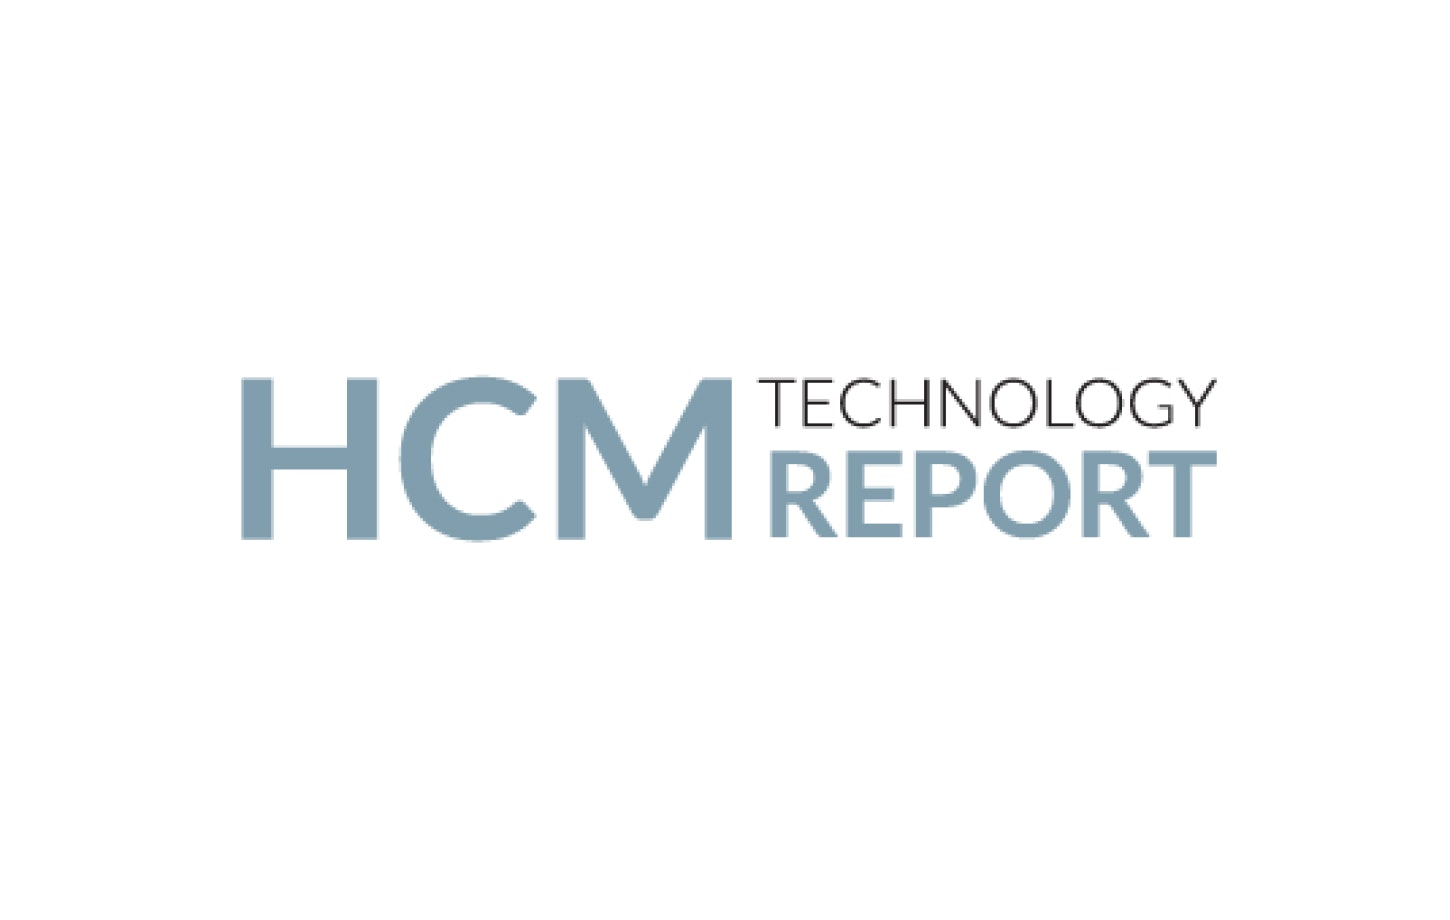 hcm technology report